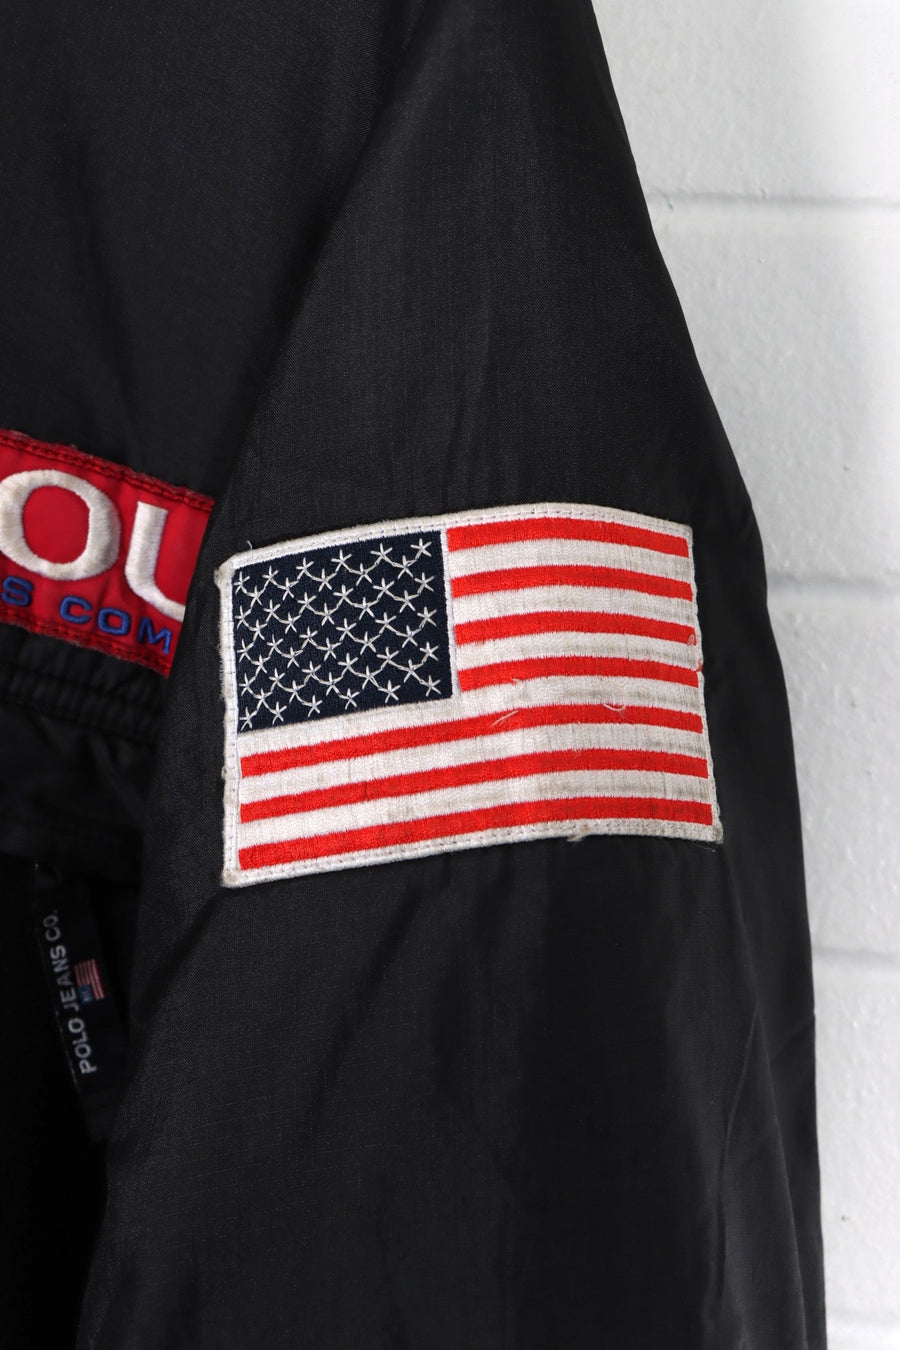 RALPH LAUREN POLO JEANS NASA Embroidered Flag 1/4 Zip Fleece Jacket (L)